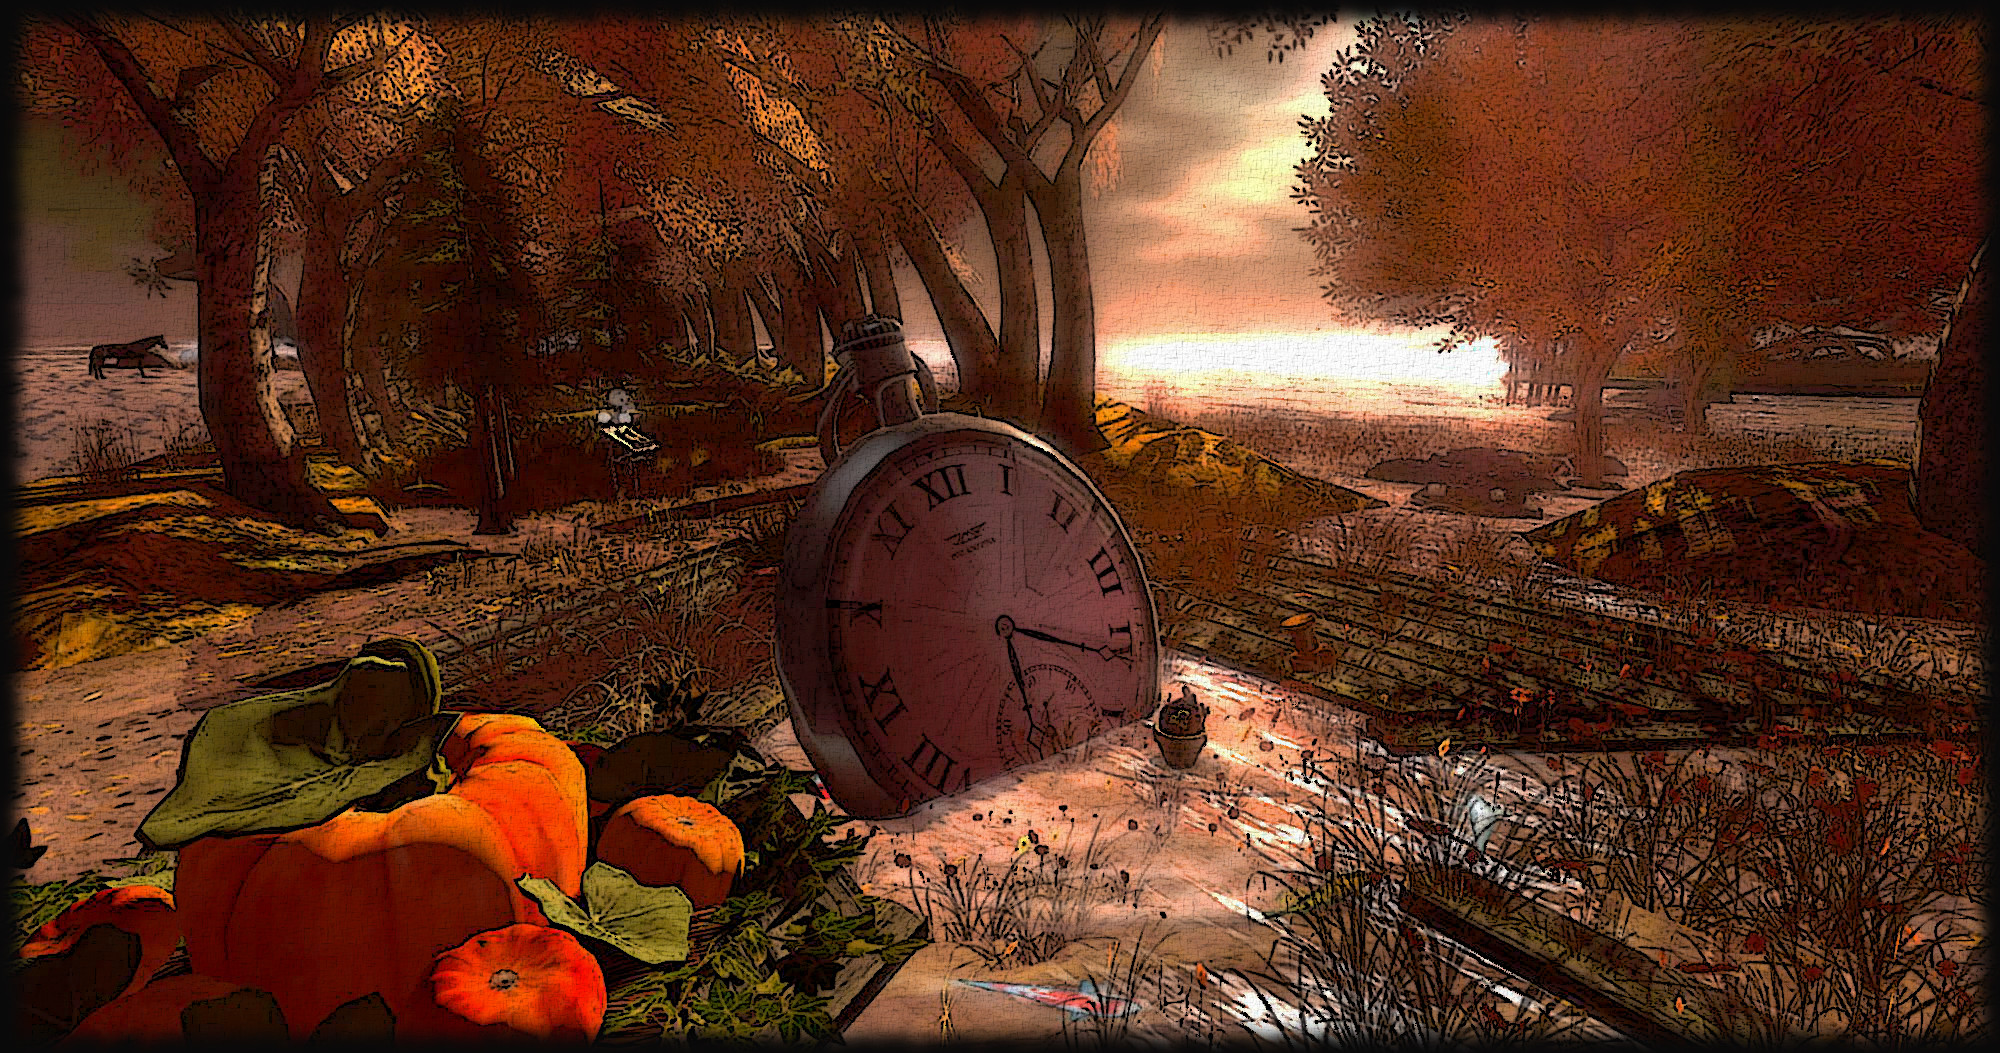 Autumn [Imagination], Intouchable; Inara Pey, November 2014, on Flickr